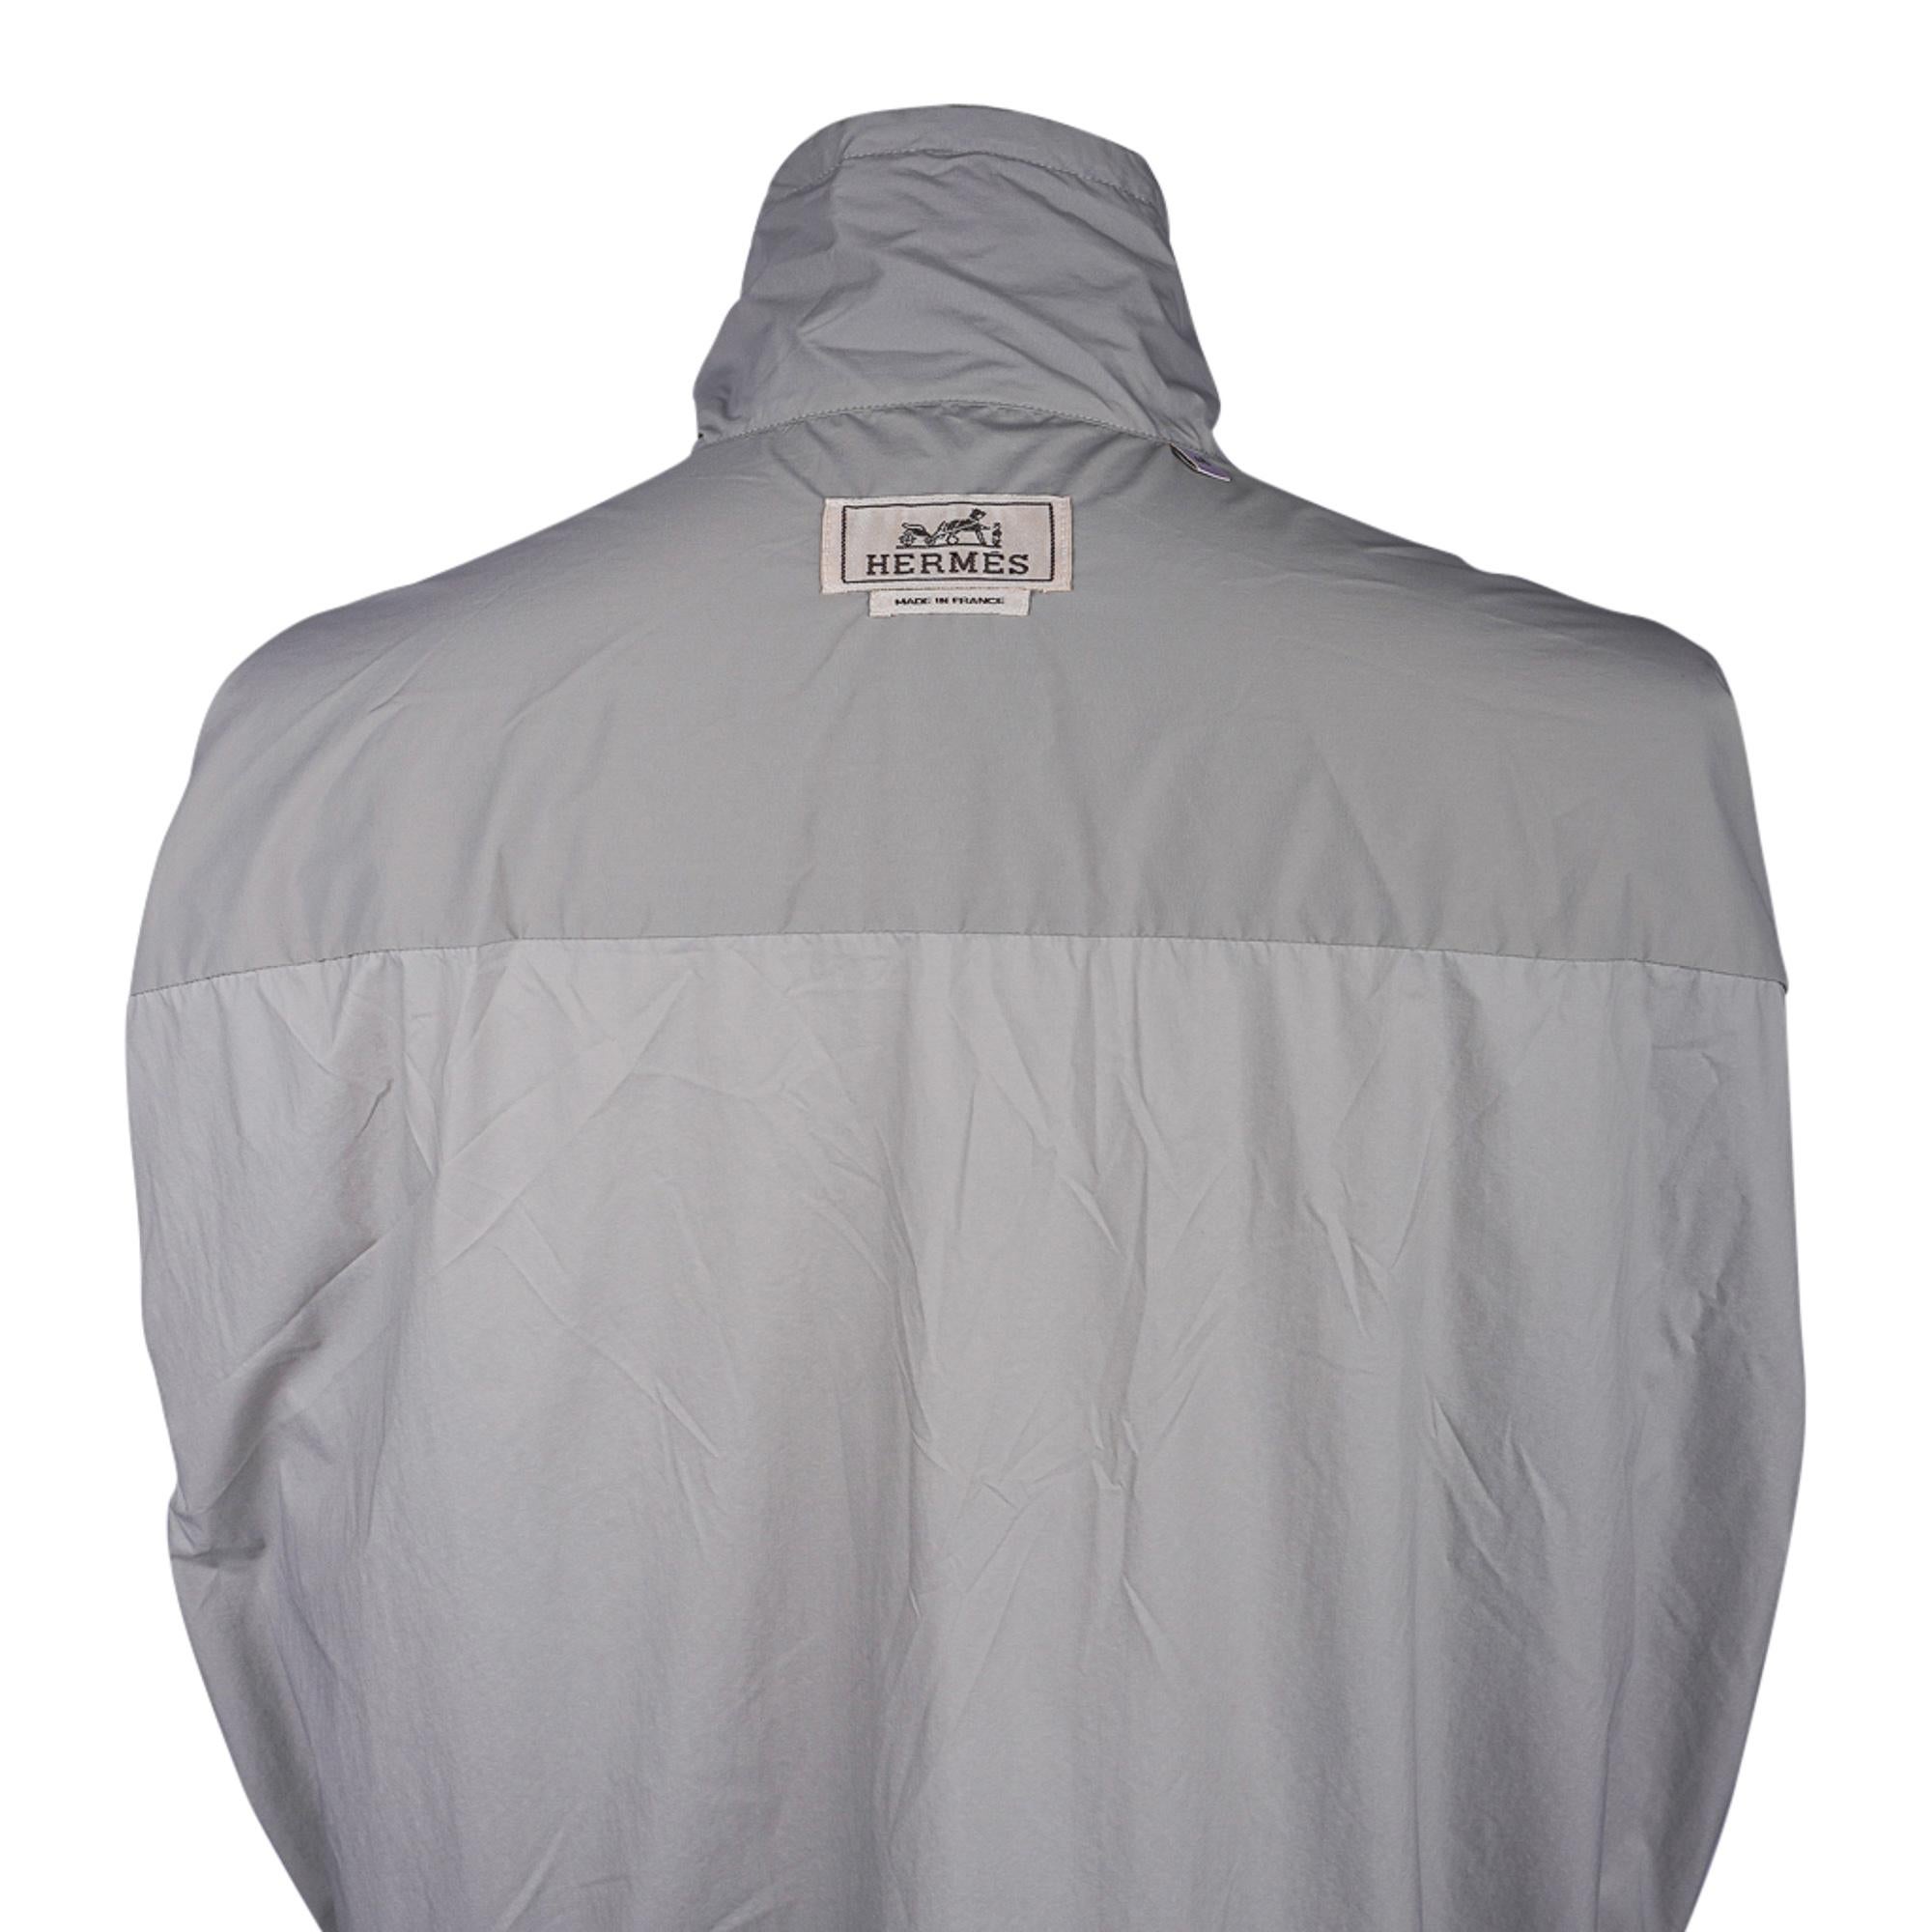 Hermes Men's Lightweight Technical Overshirt 48 / 38 New For Sale at ...